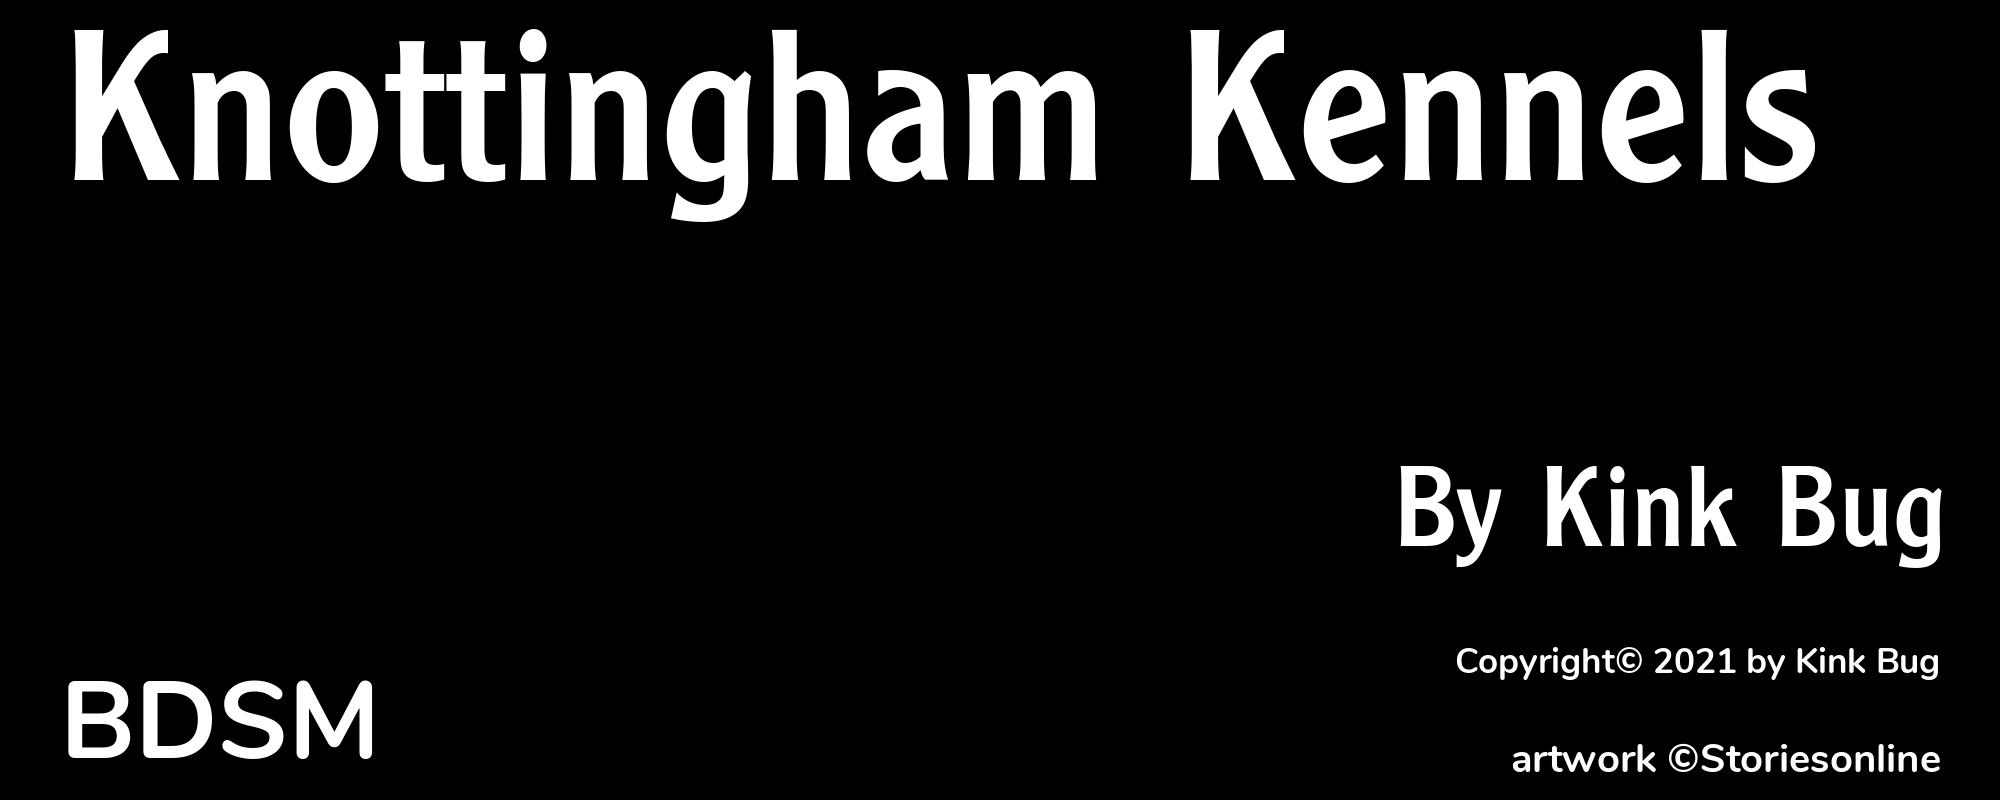 Knottingham Kennels - Cover